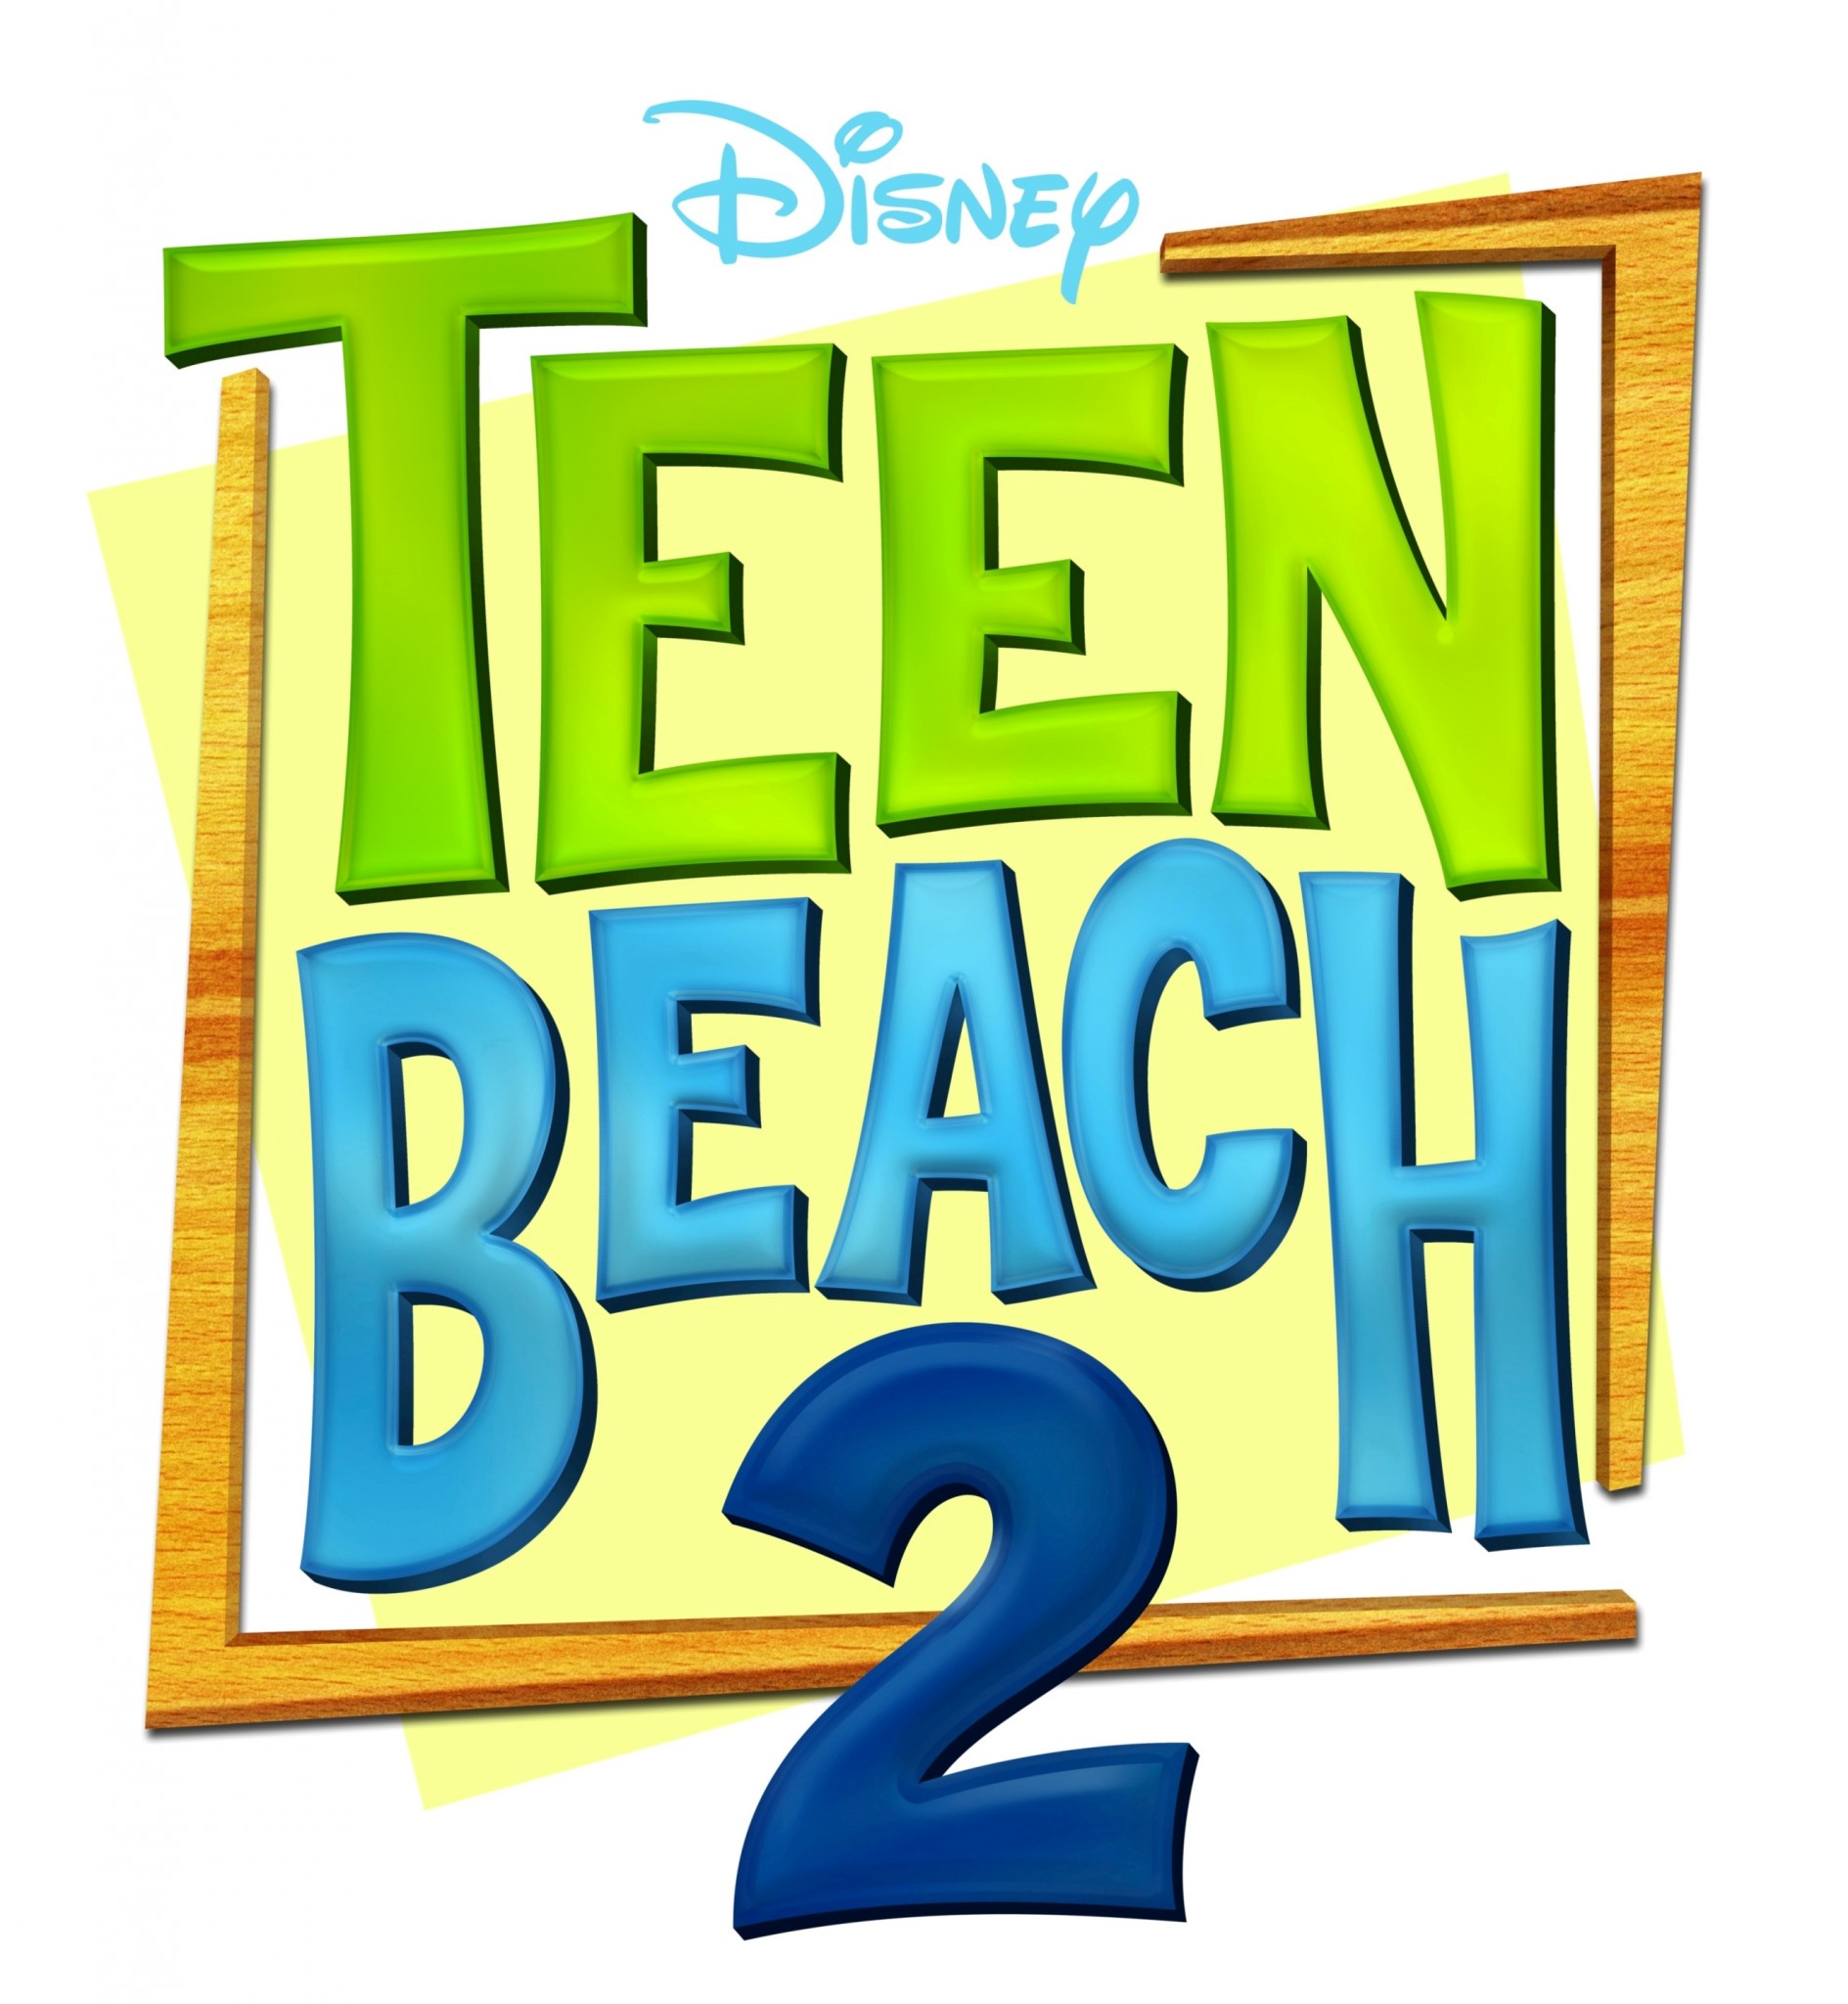 Disney Channel Logo Teen Beach 2 Disney Channel Estreia «Teen Beach 2»